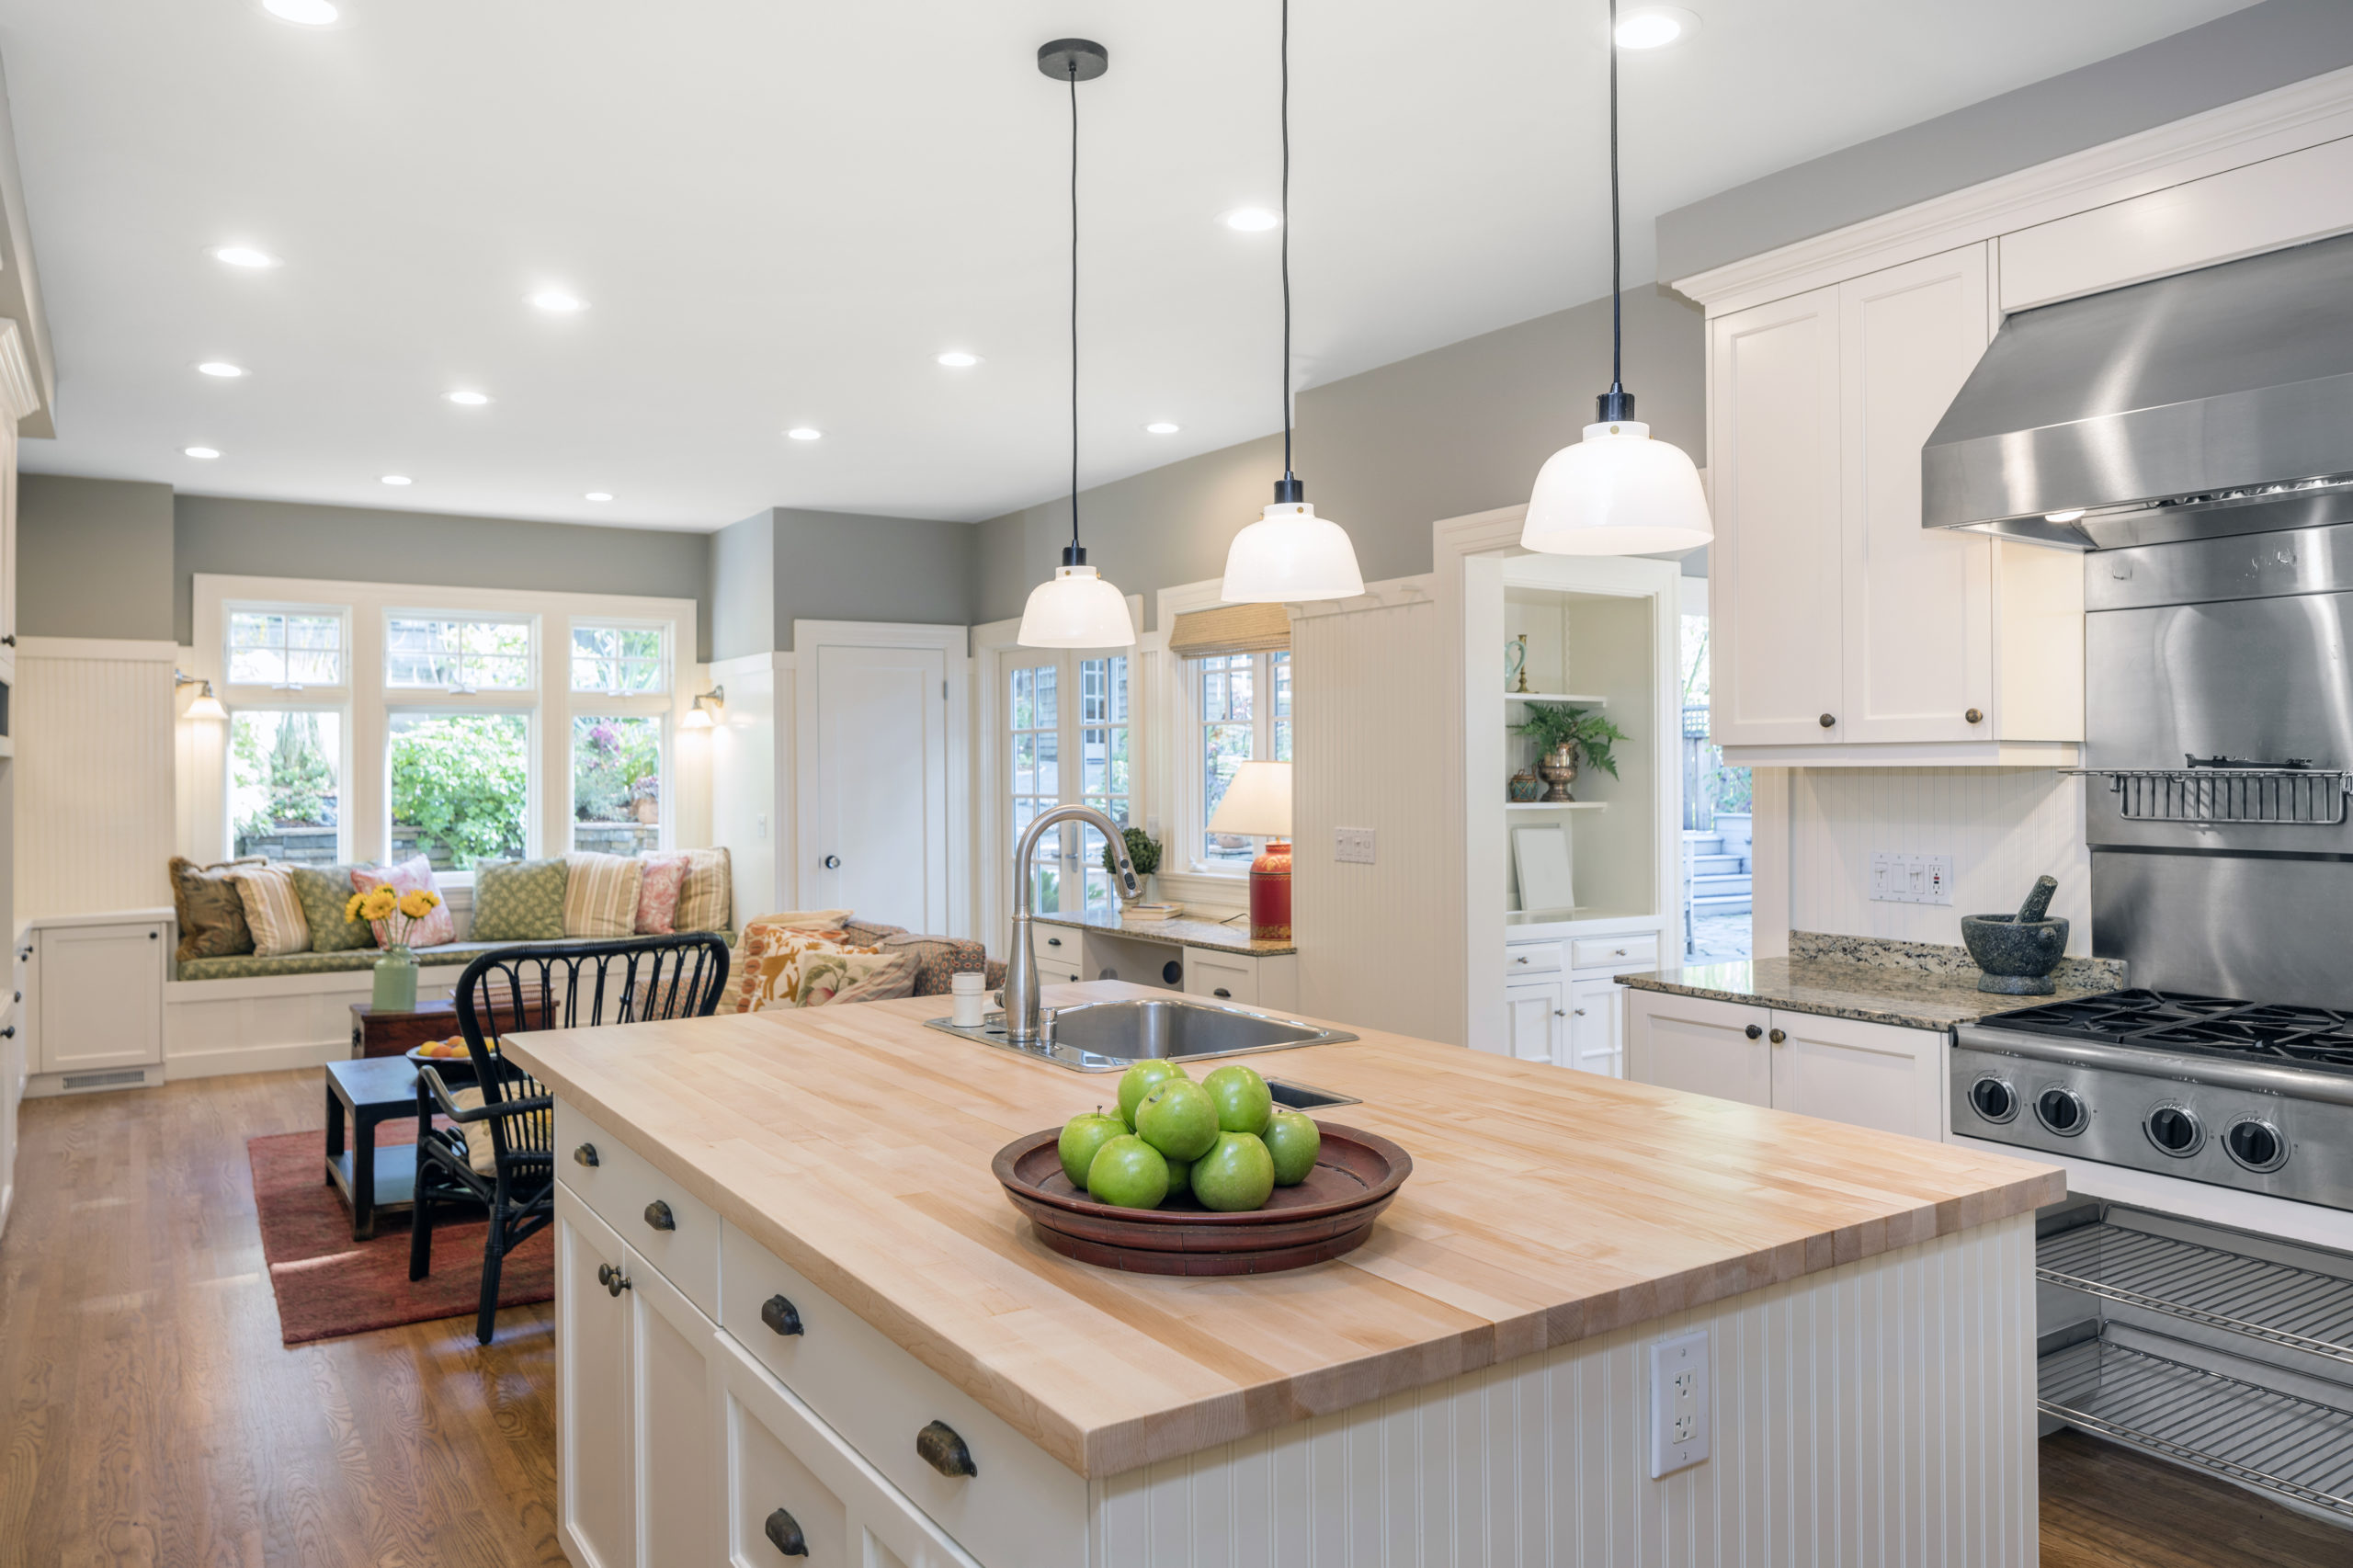 Amazing Luxury Kitchen Interior in white with wooden floor and kitchen island. Springfield IL